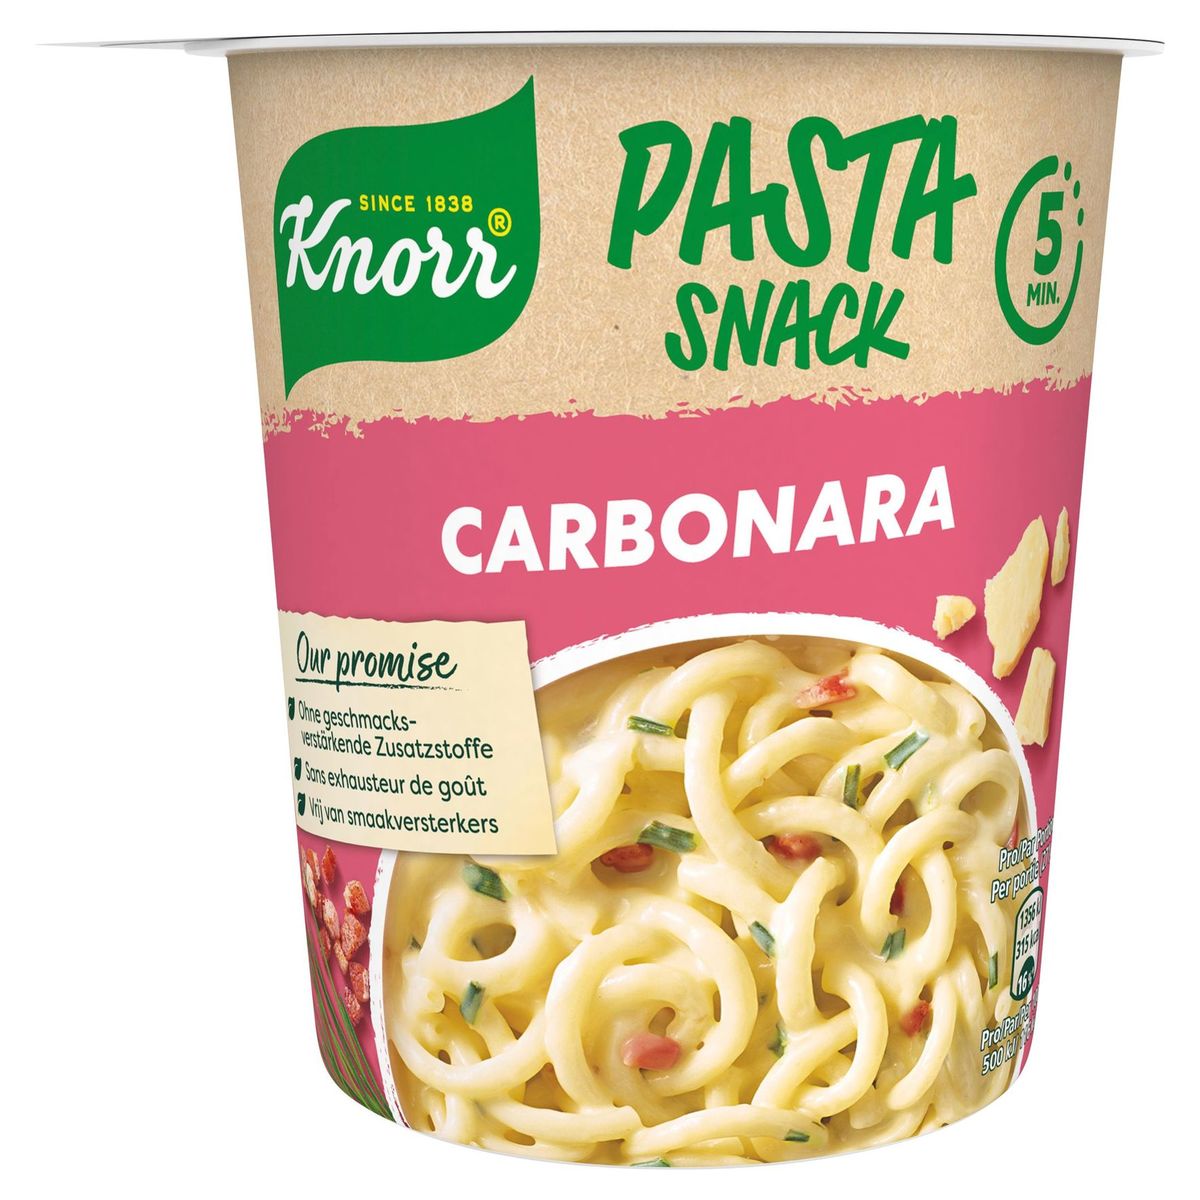 Knorr Instantanée Snack Carbonara 71 g